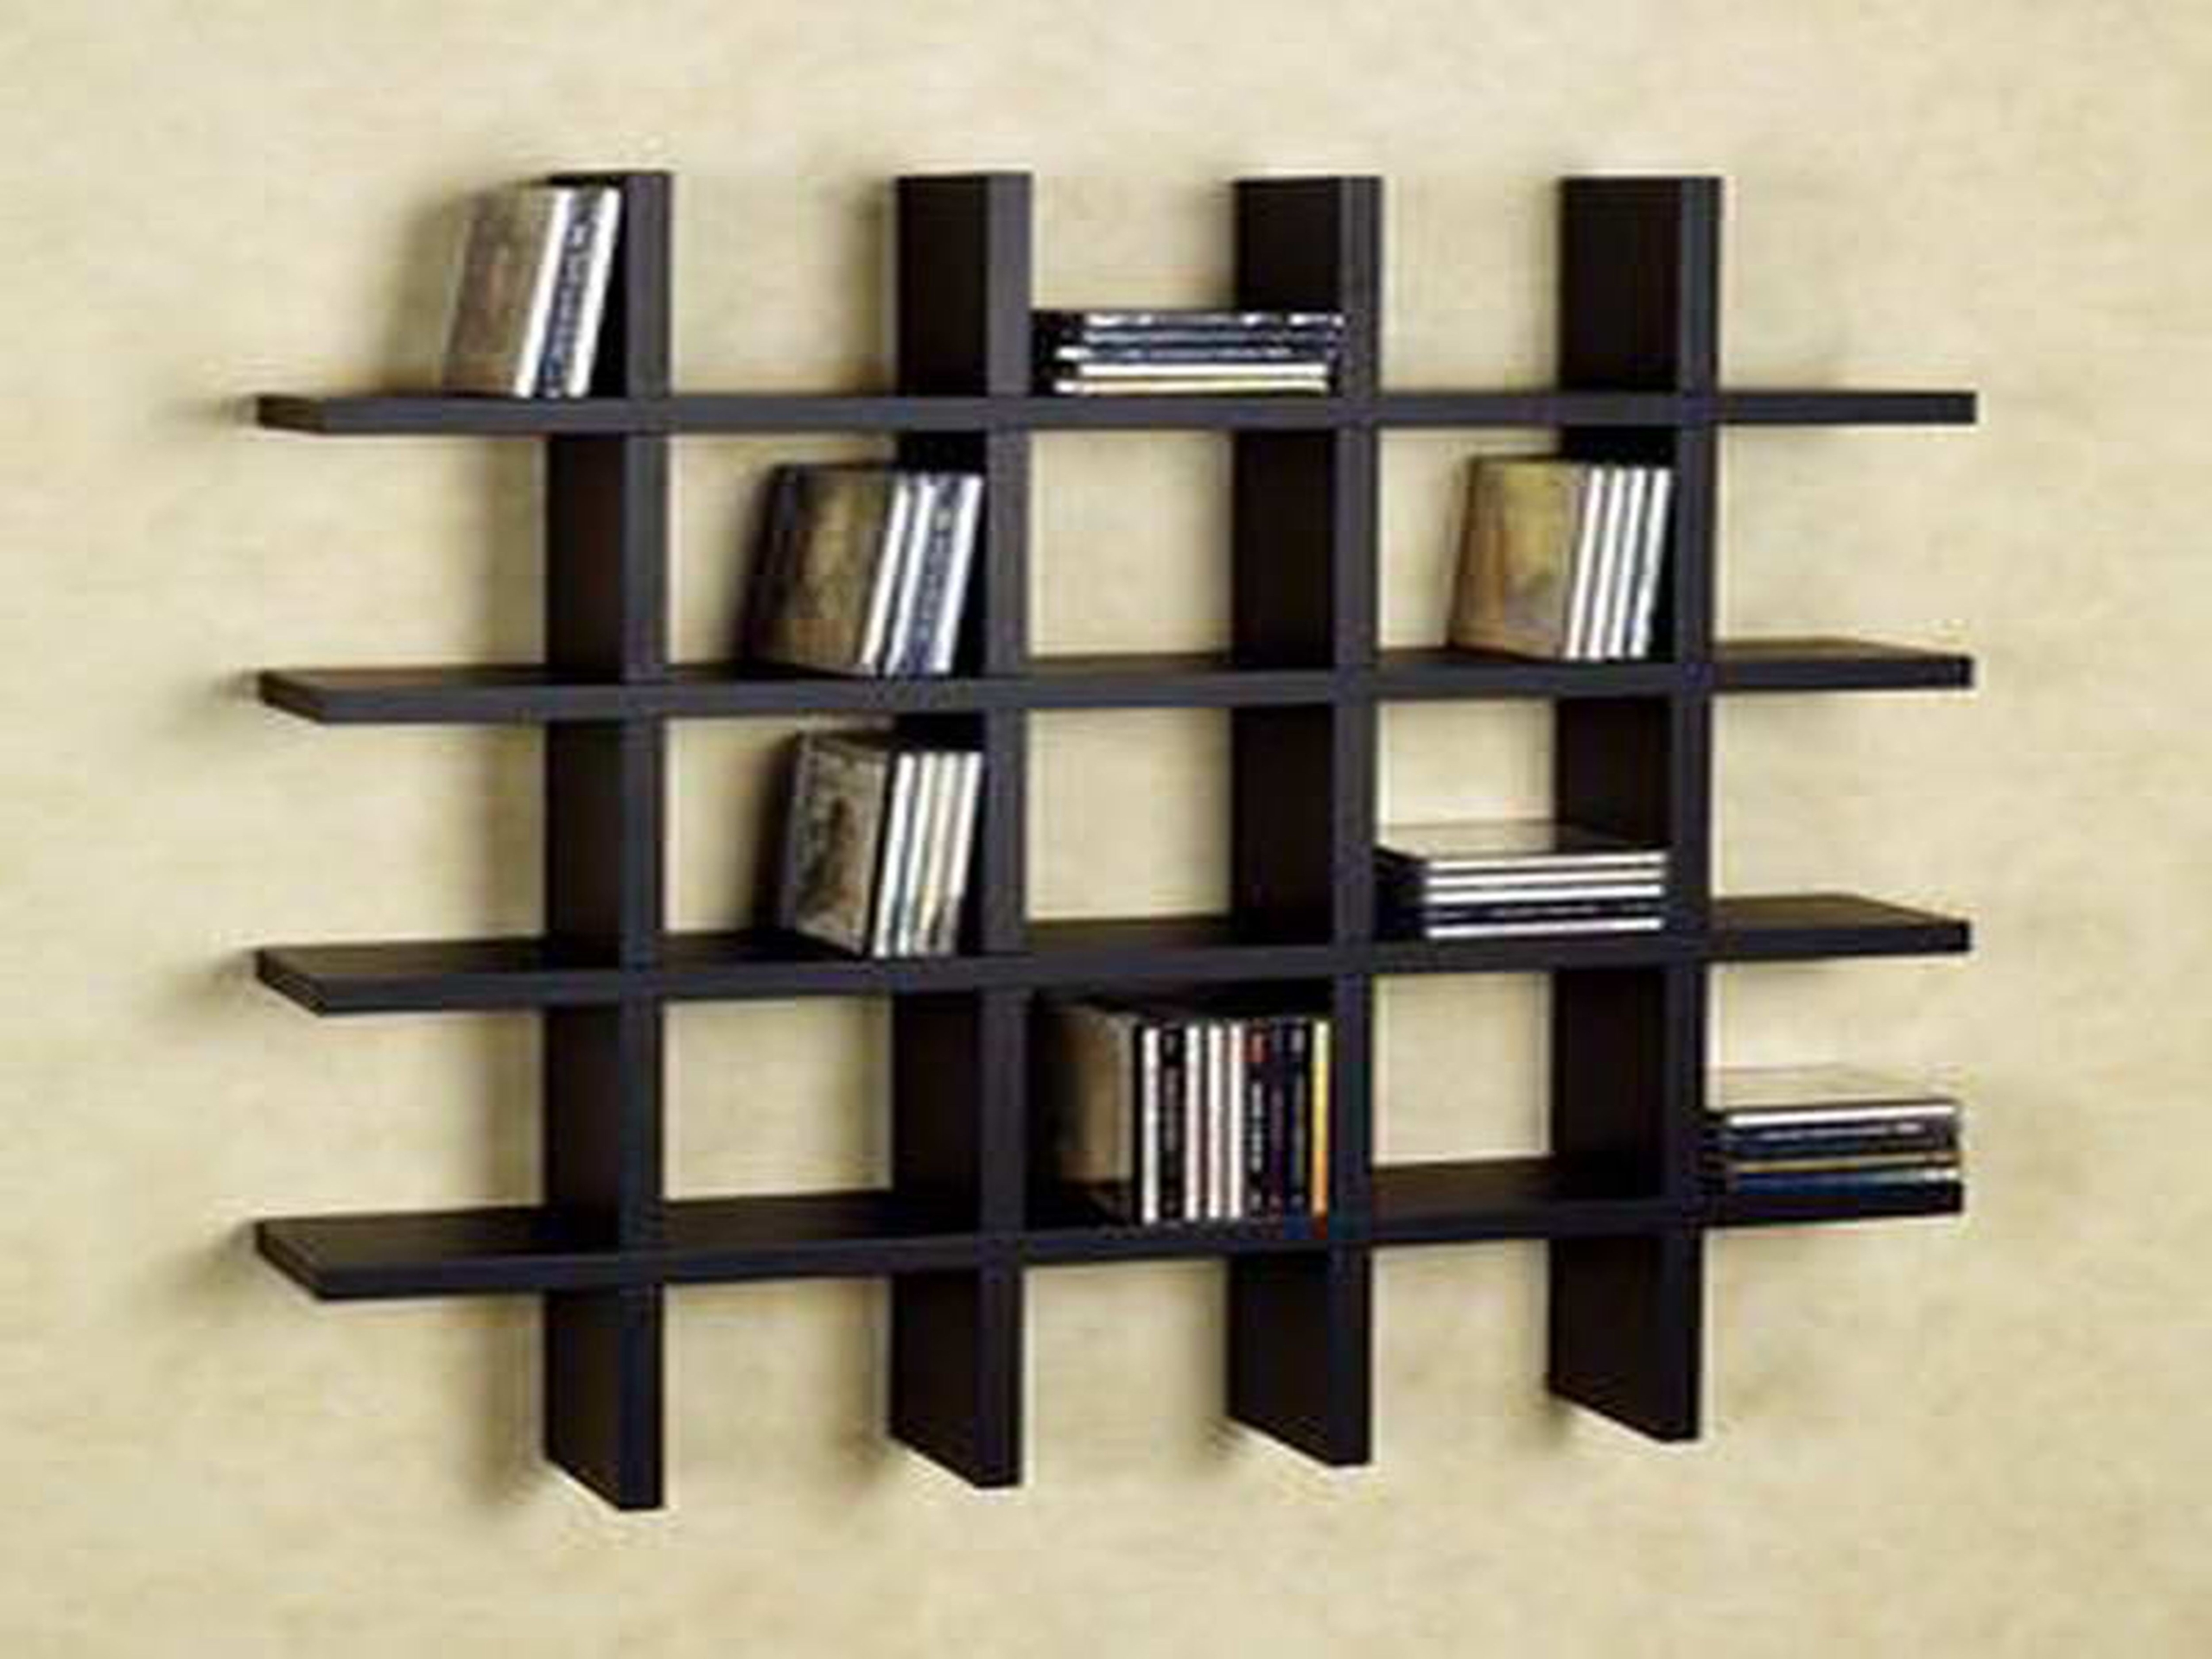 Espresso wall mounted shelves as inspiring wall bookshelves ideas